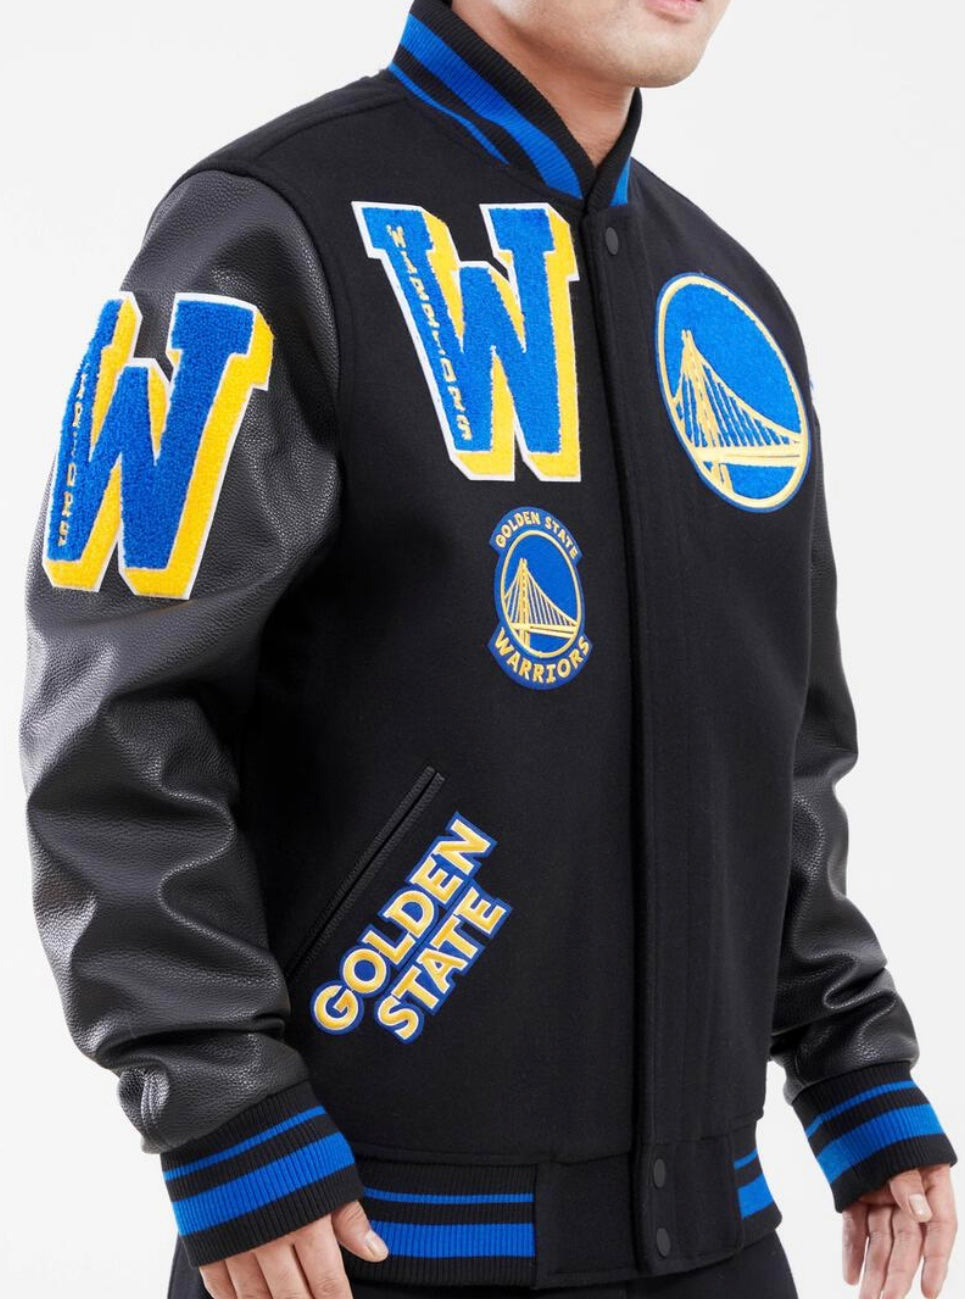 Golden State Warriors Jacket 